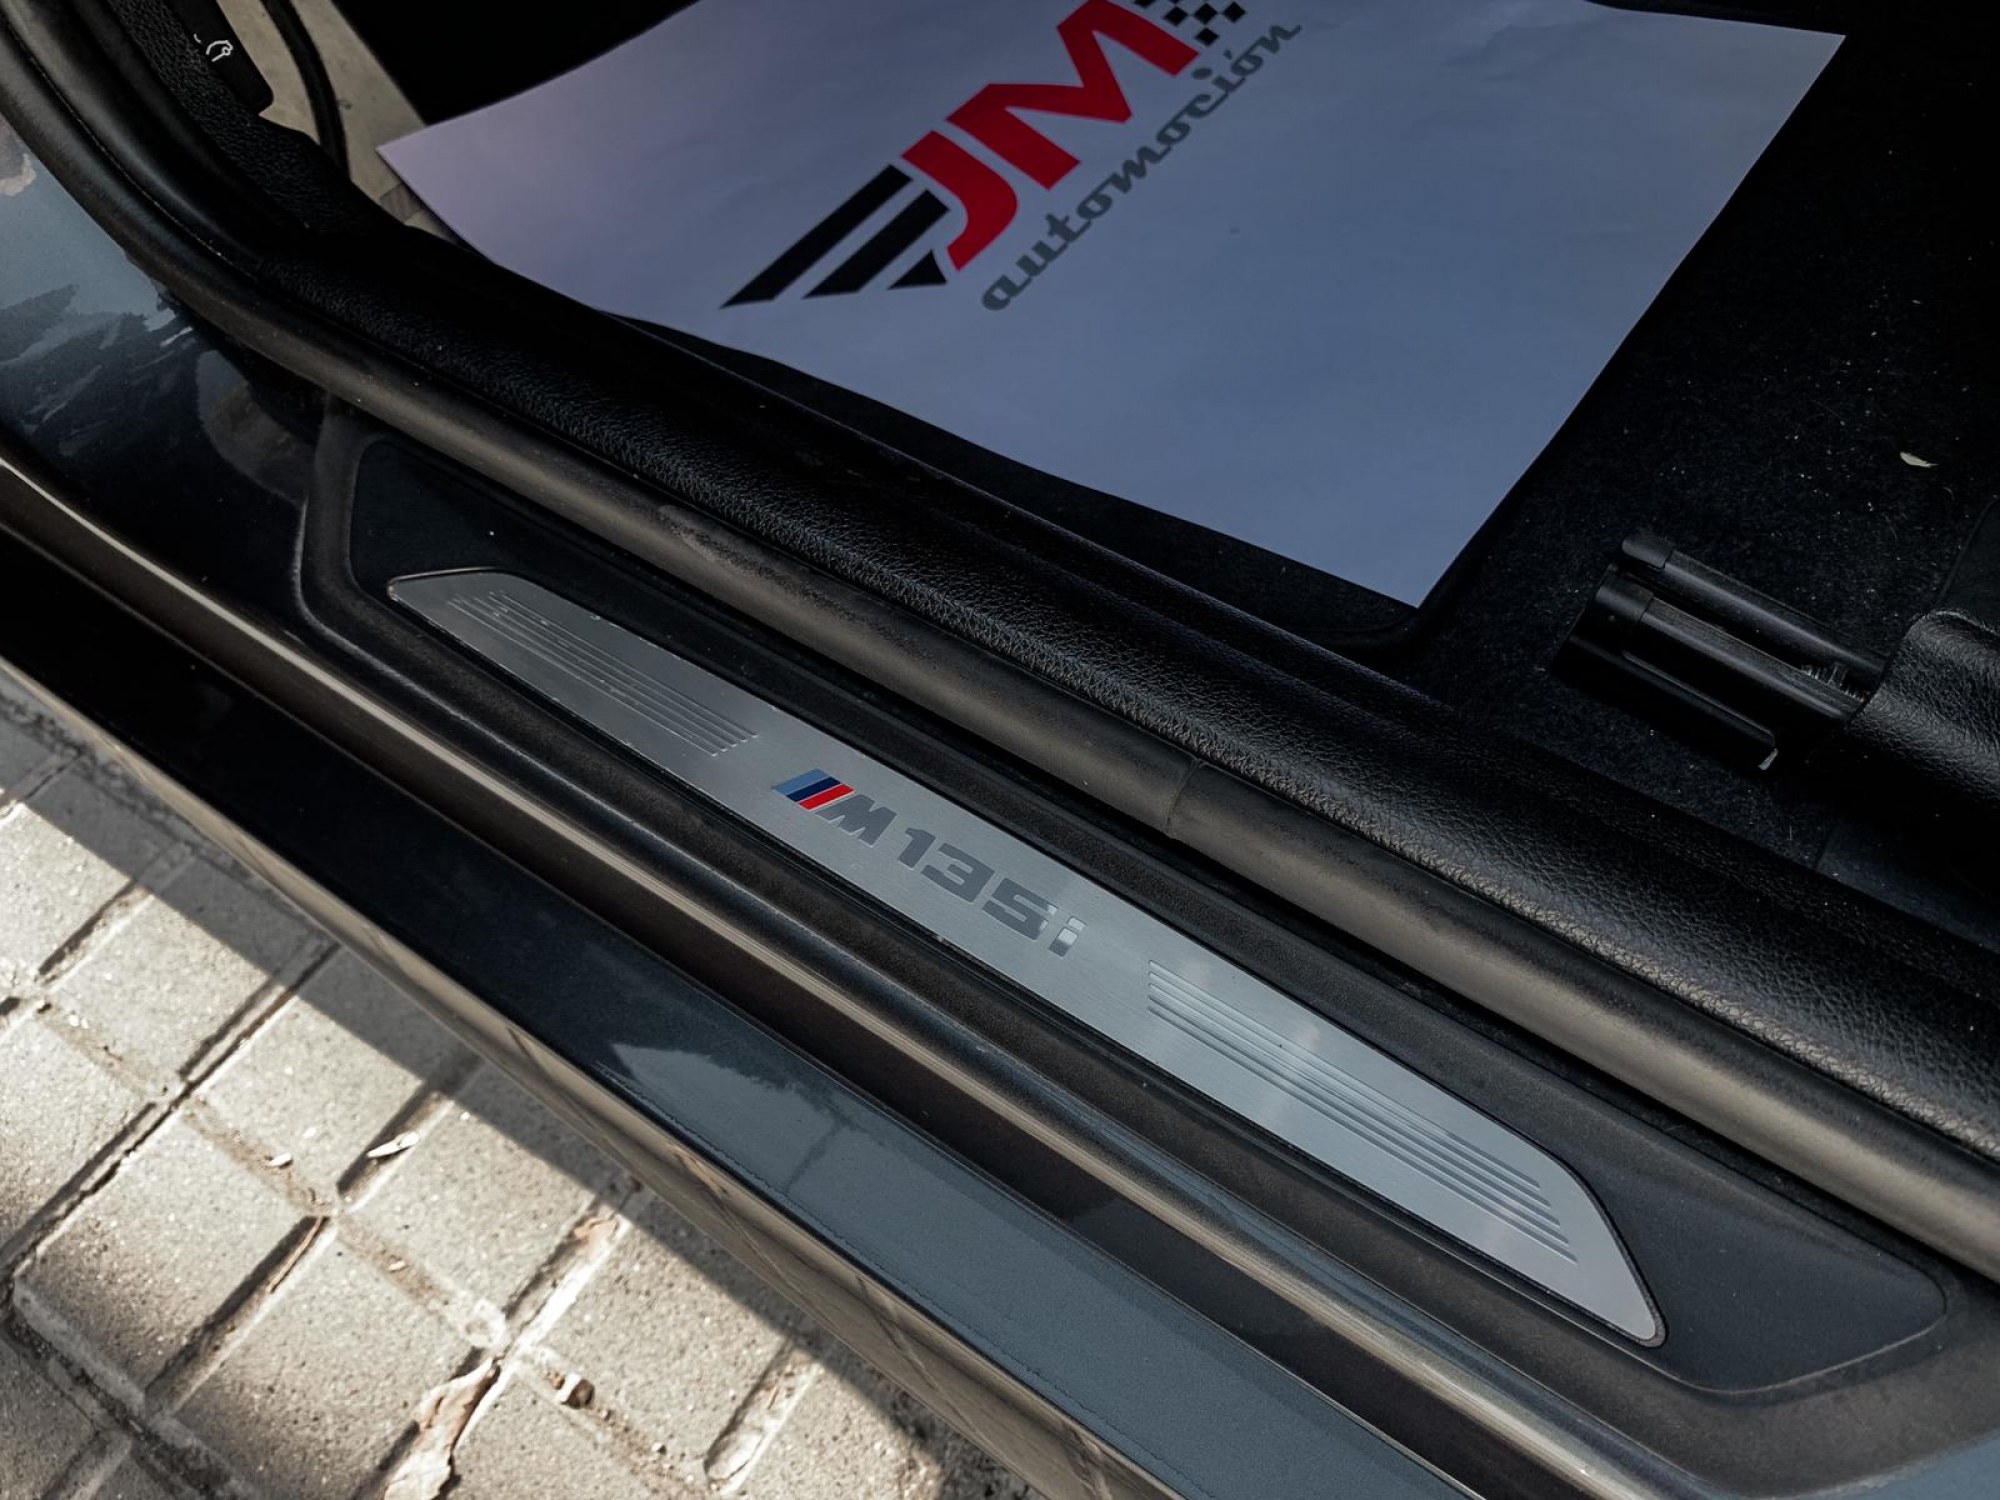 BMW SERIE 1 M135i xDrive 5p -NACIONAL, PERFECTO ESTADO-